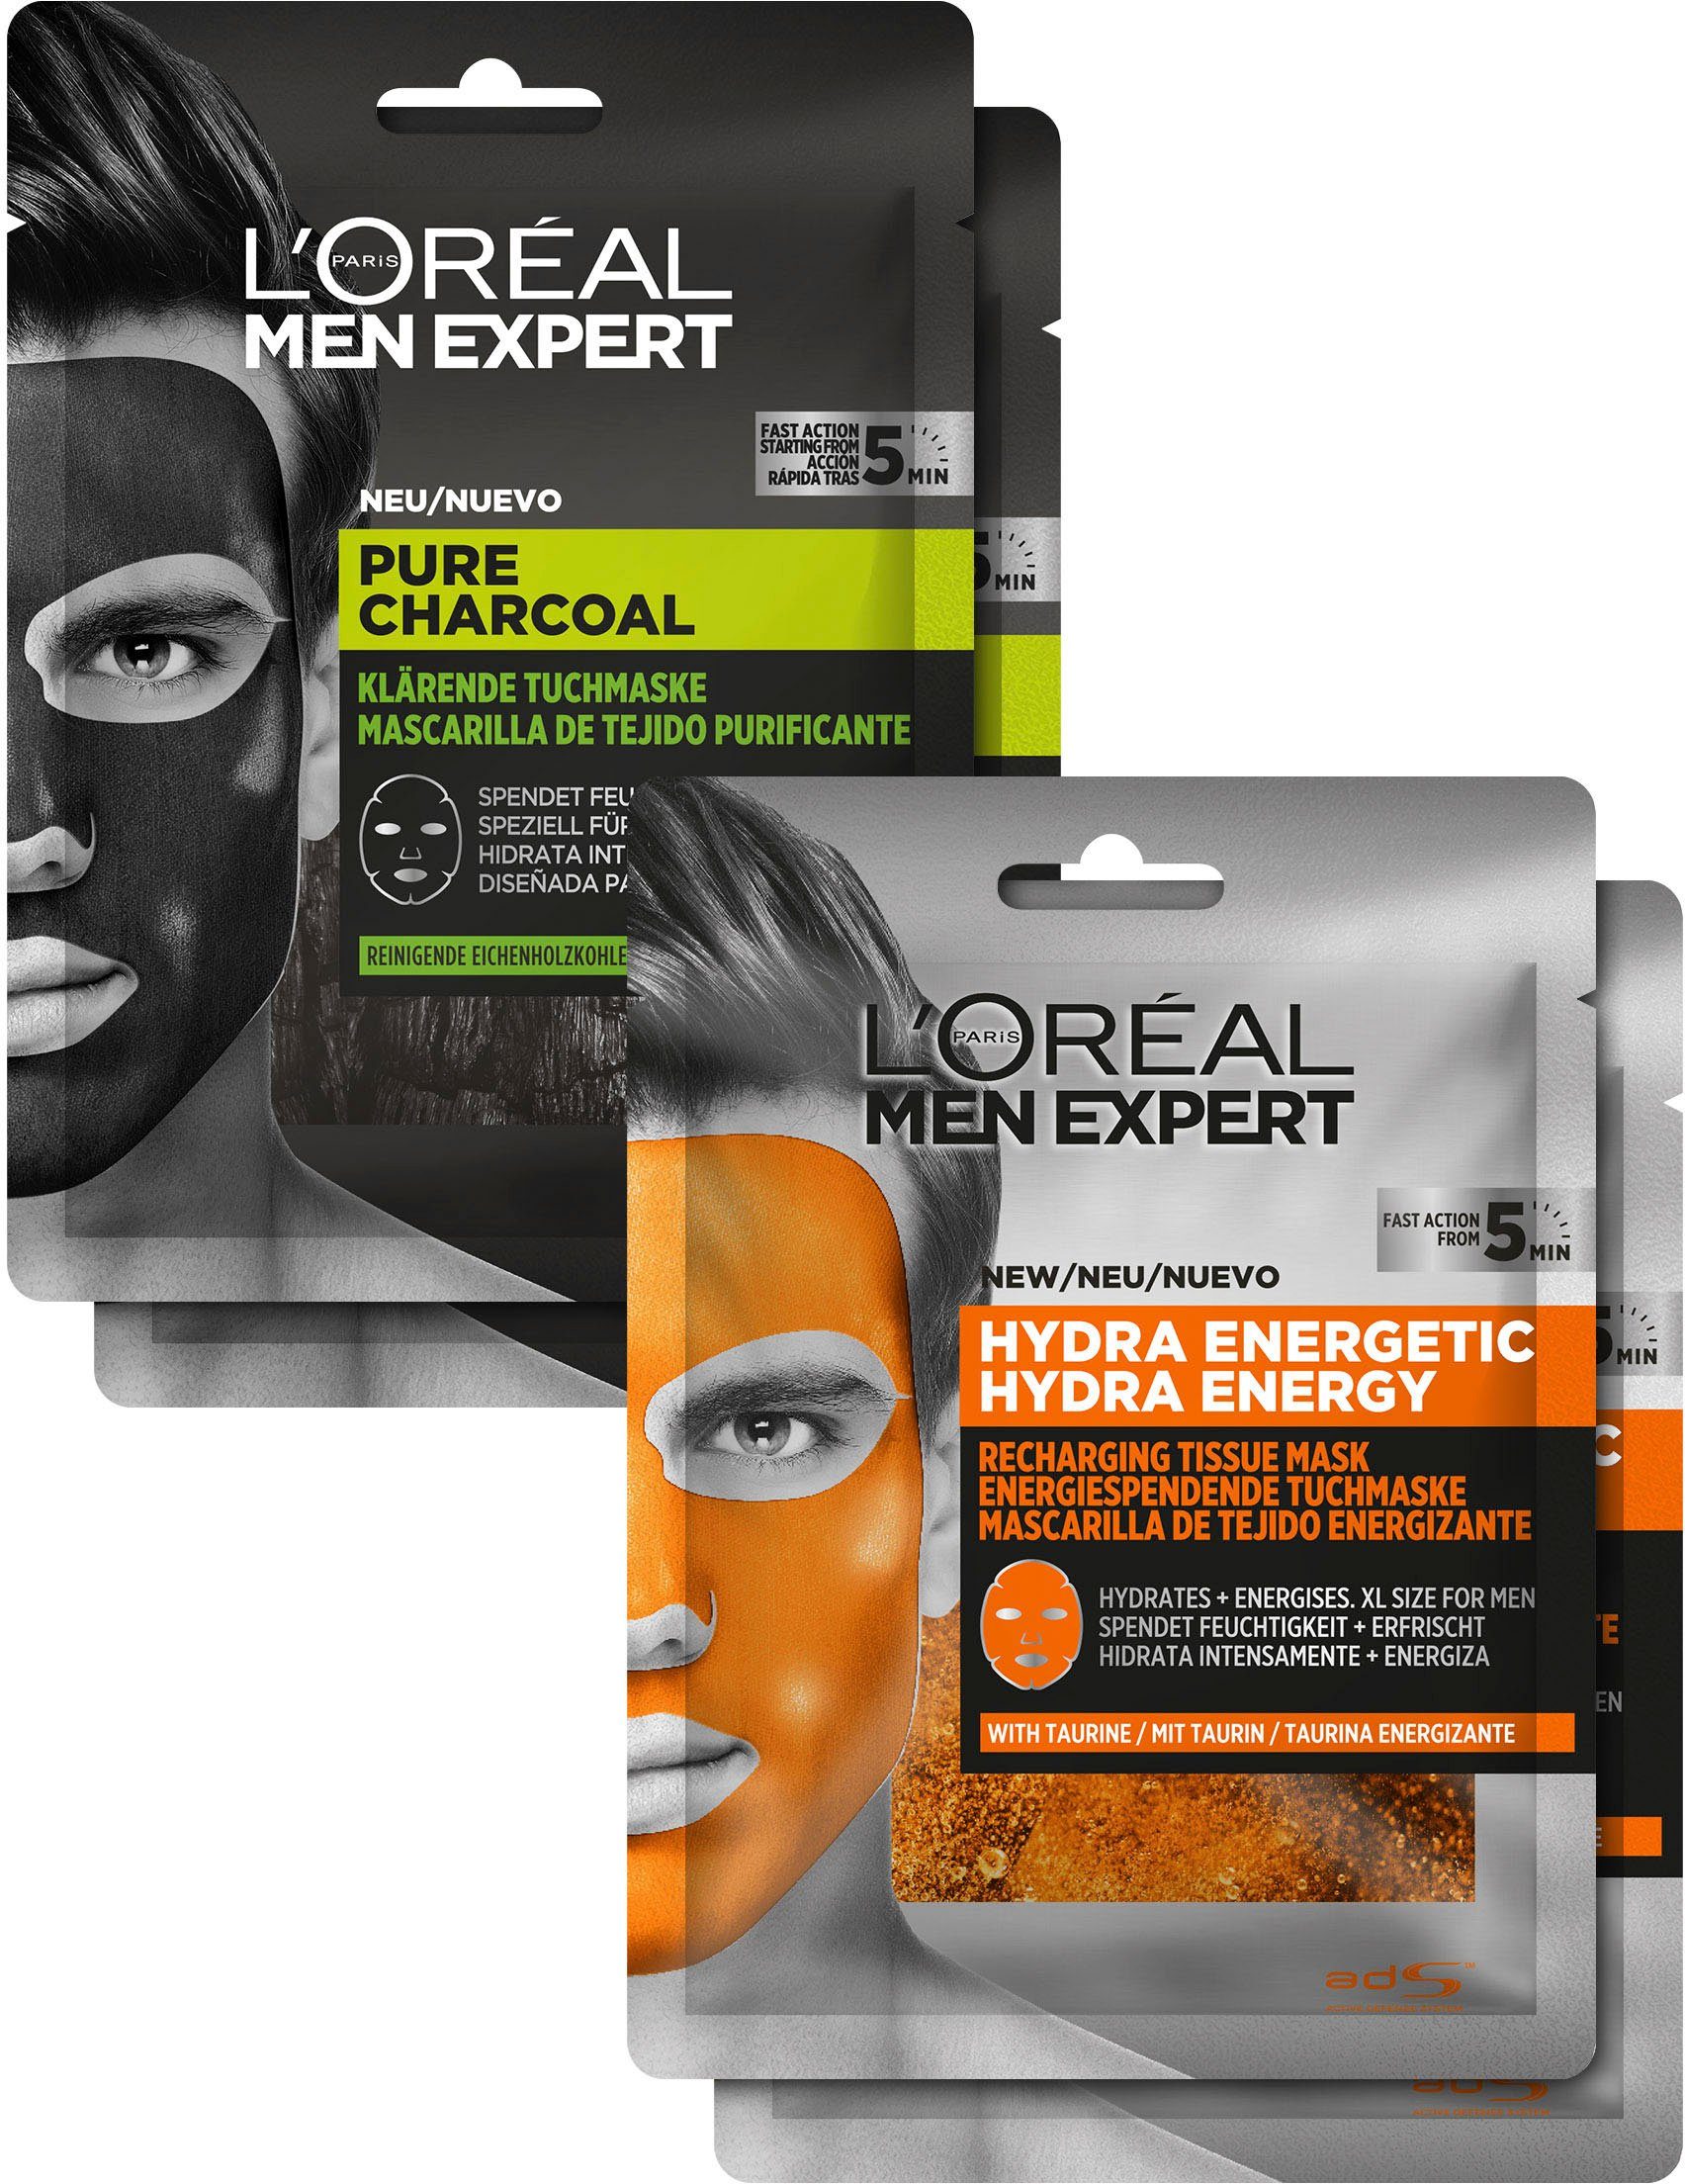 L'ORÉAL PARIS MEN EXPERT Gesichtsmasken-Set Pure Charcoal und Hydra Energy Set, 4-tlg. | Gesichtsmasken